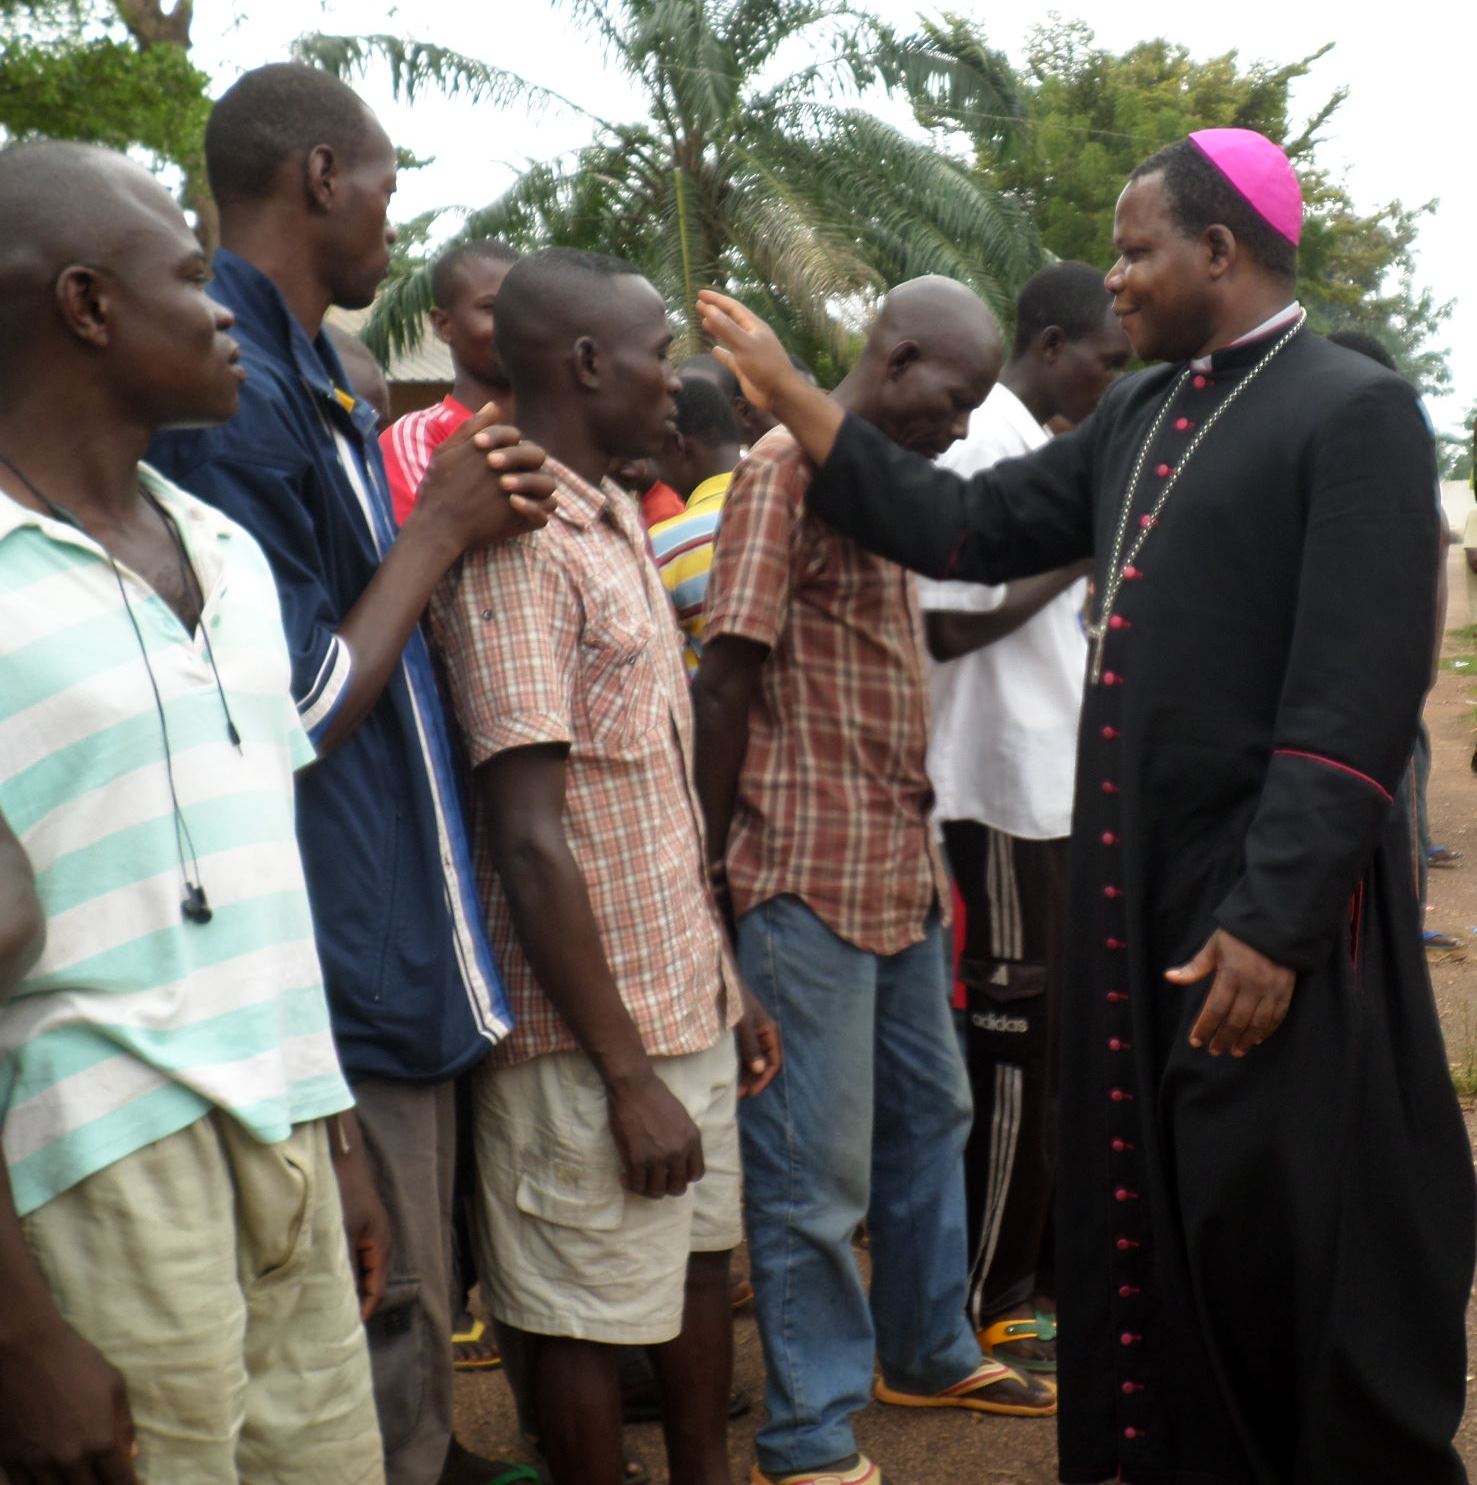 Visit of Archbishop Dieudonné Nzapalainga to Camp Beal